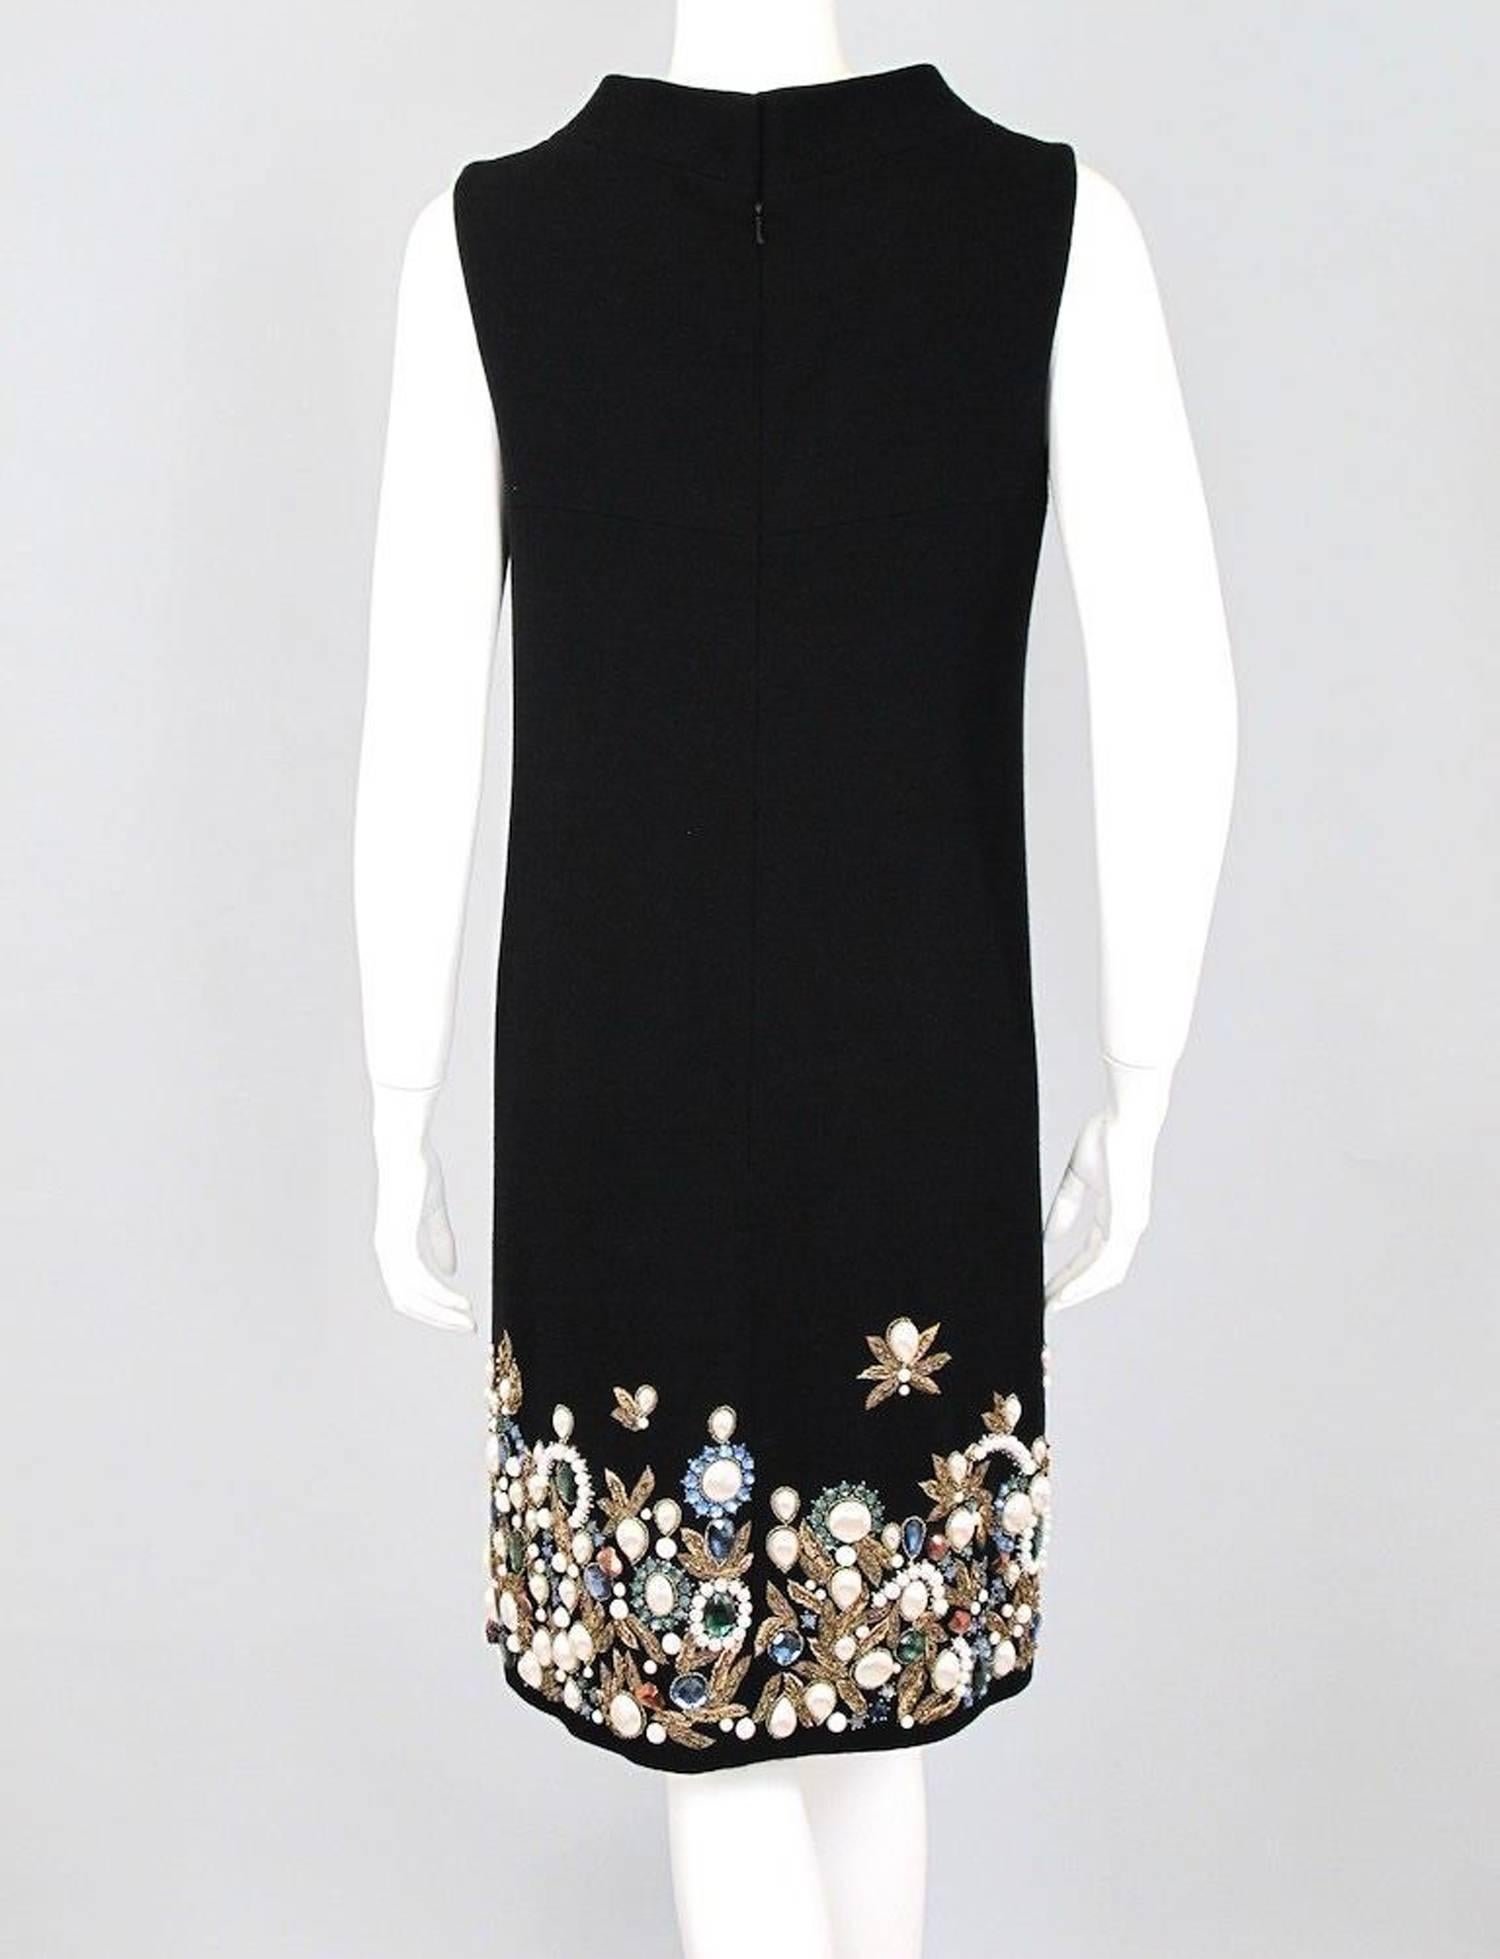 Women's Oscar De La Renta Black Wool Cocktail Dress with Gem Embroidery size 6